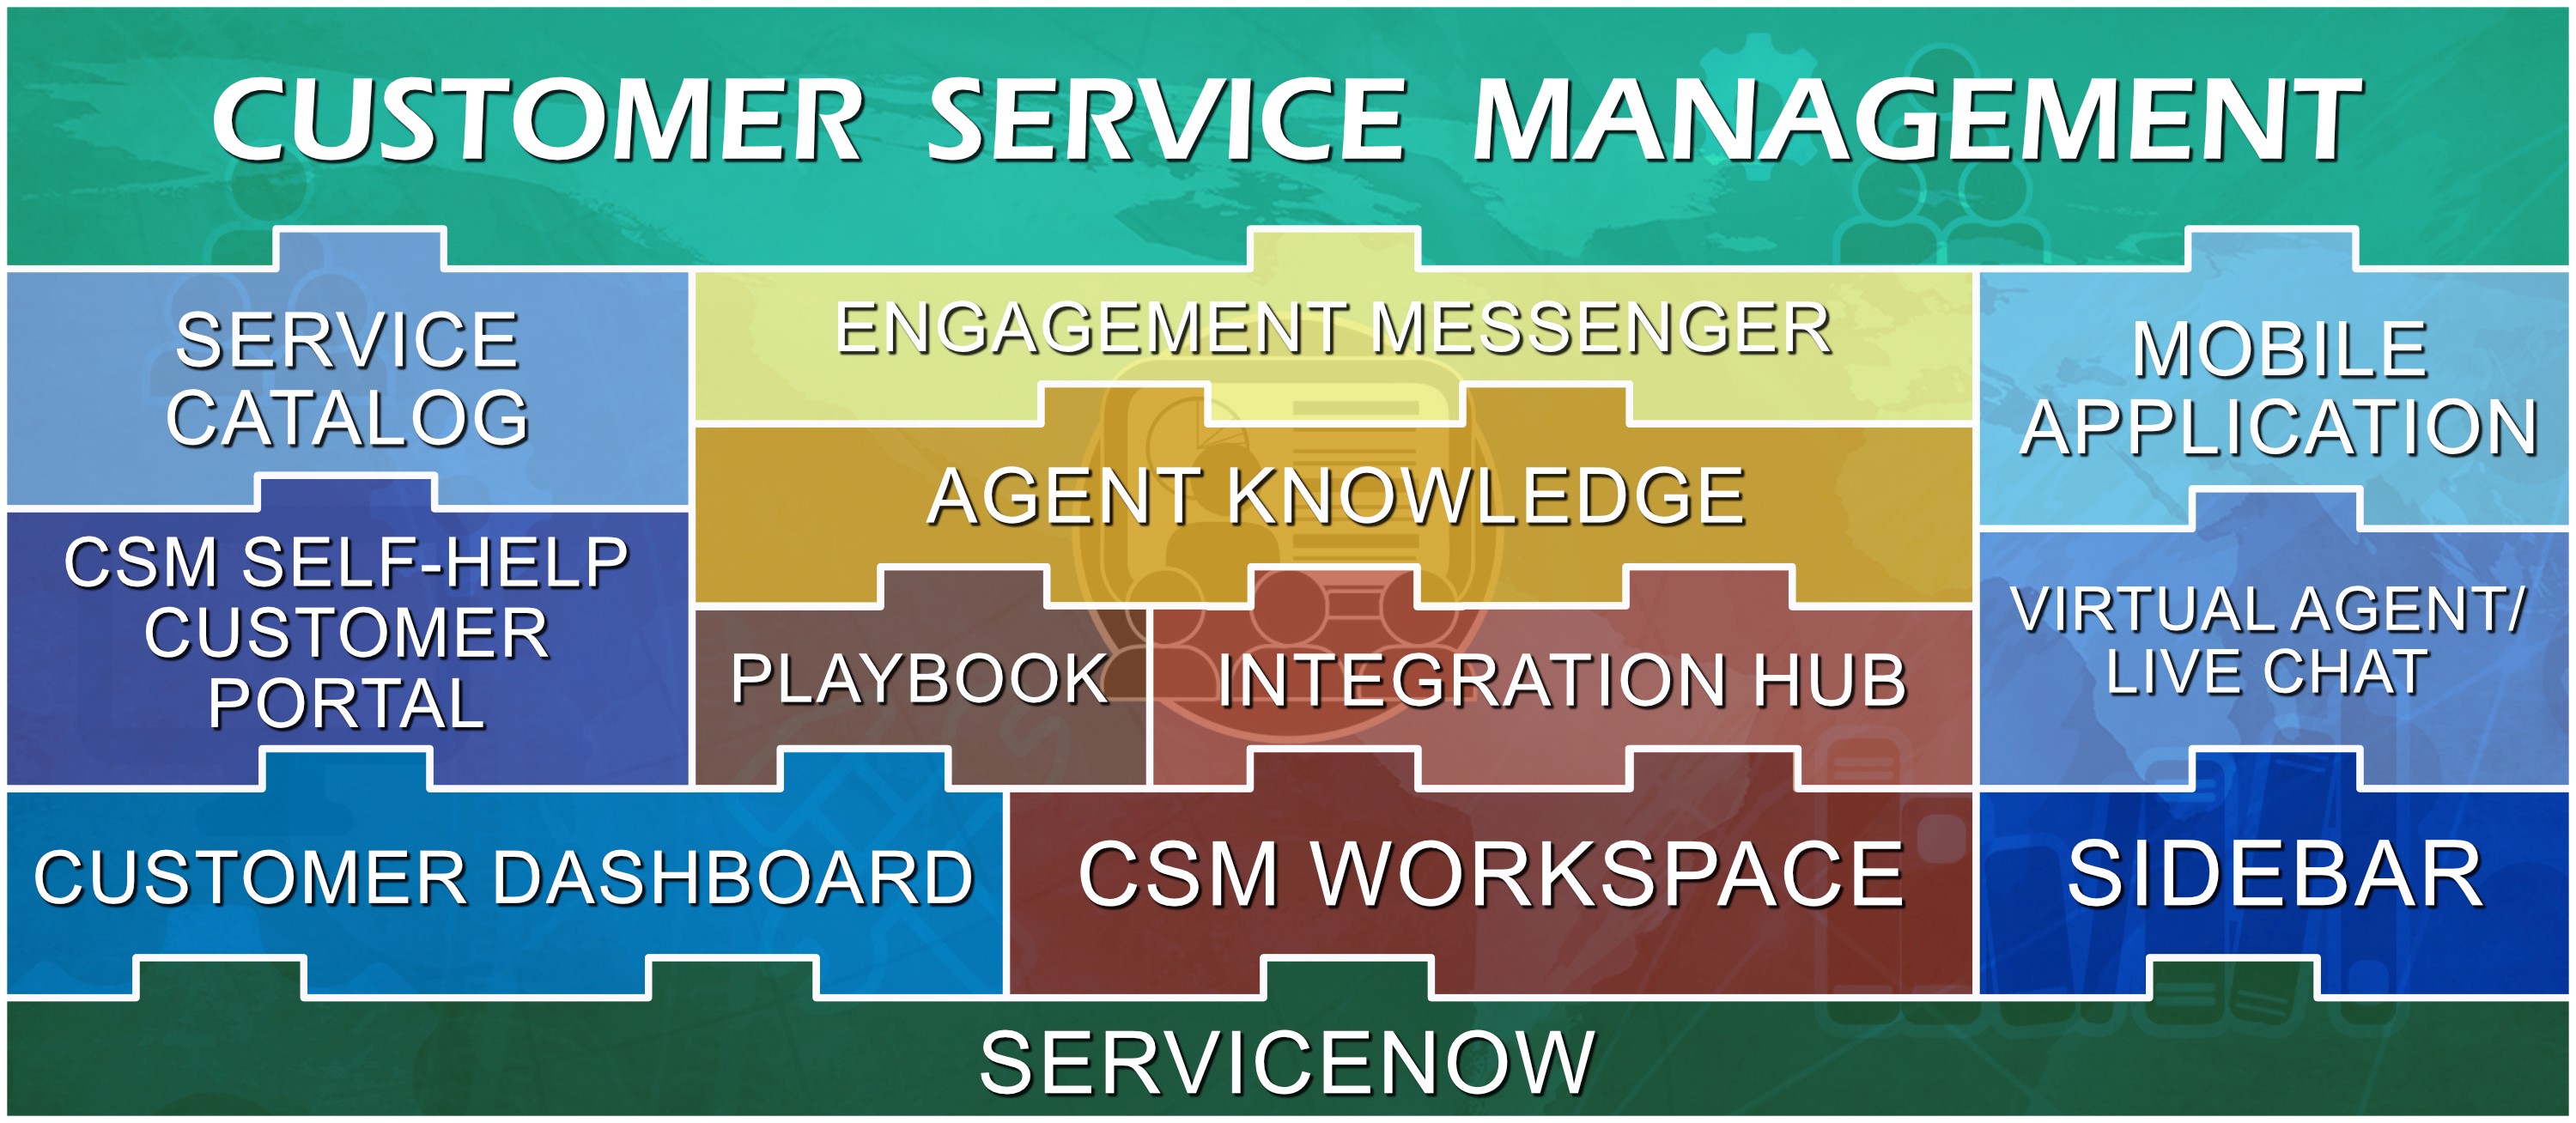 Customer service manangement graphic